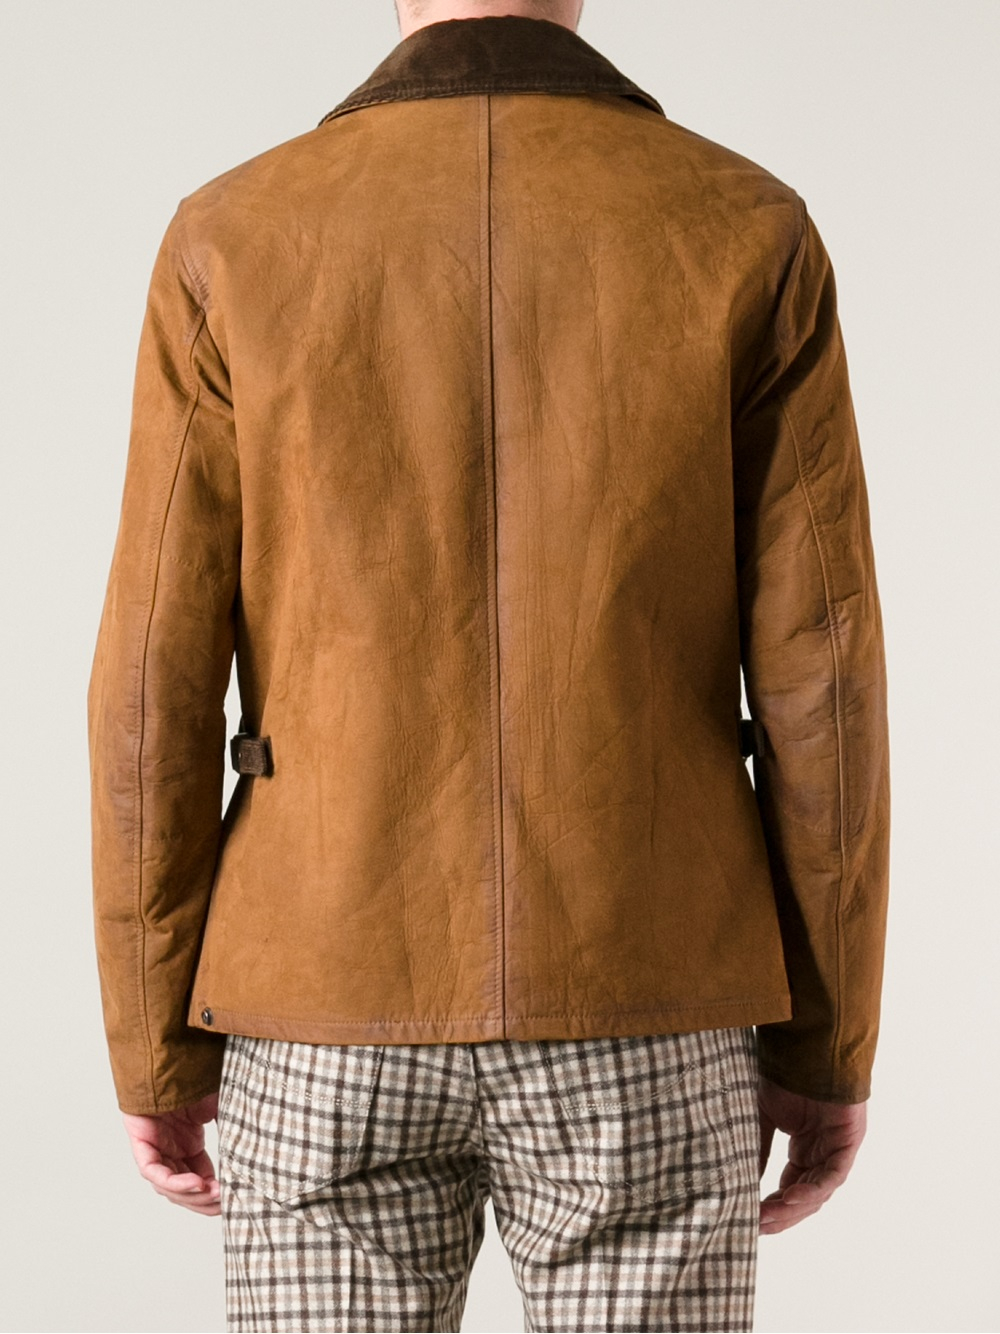 Jacob Cohen Contrast Collar Jacket in Brown for Men - Lyst